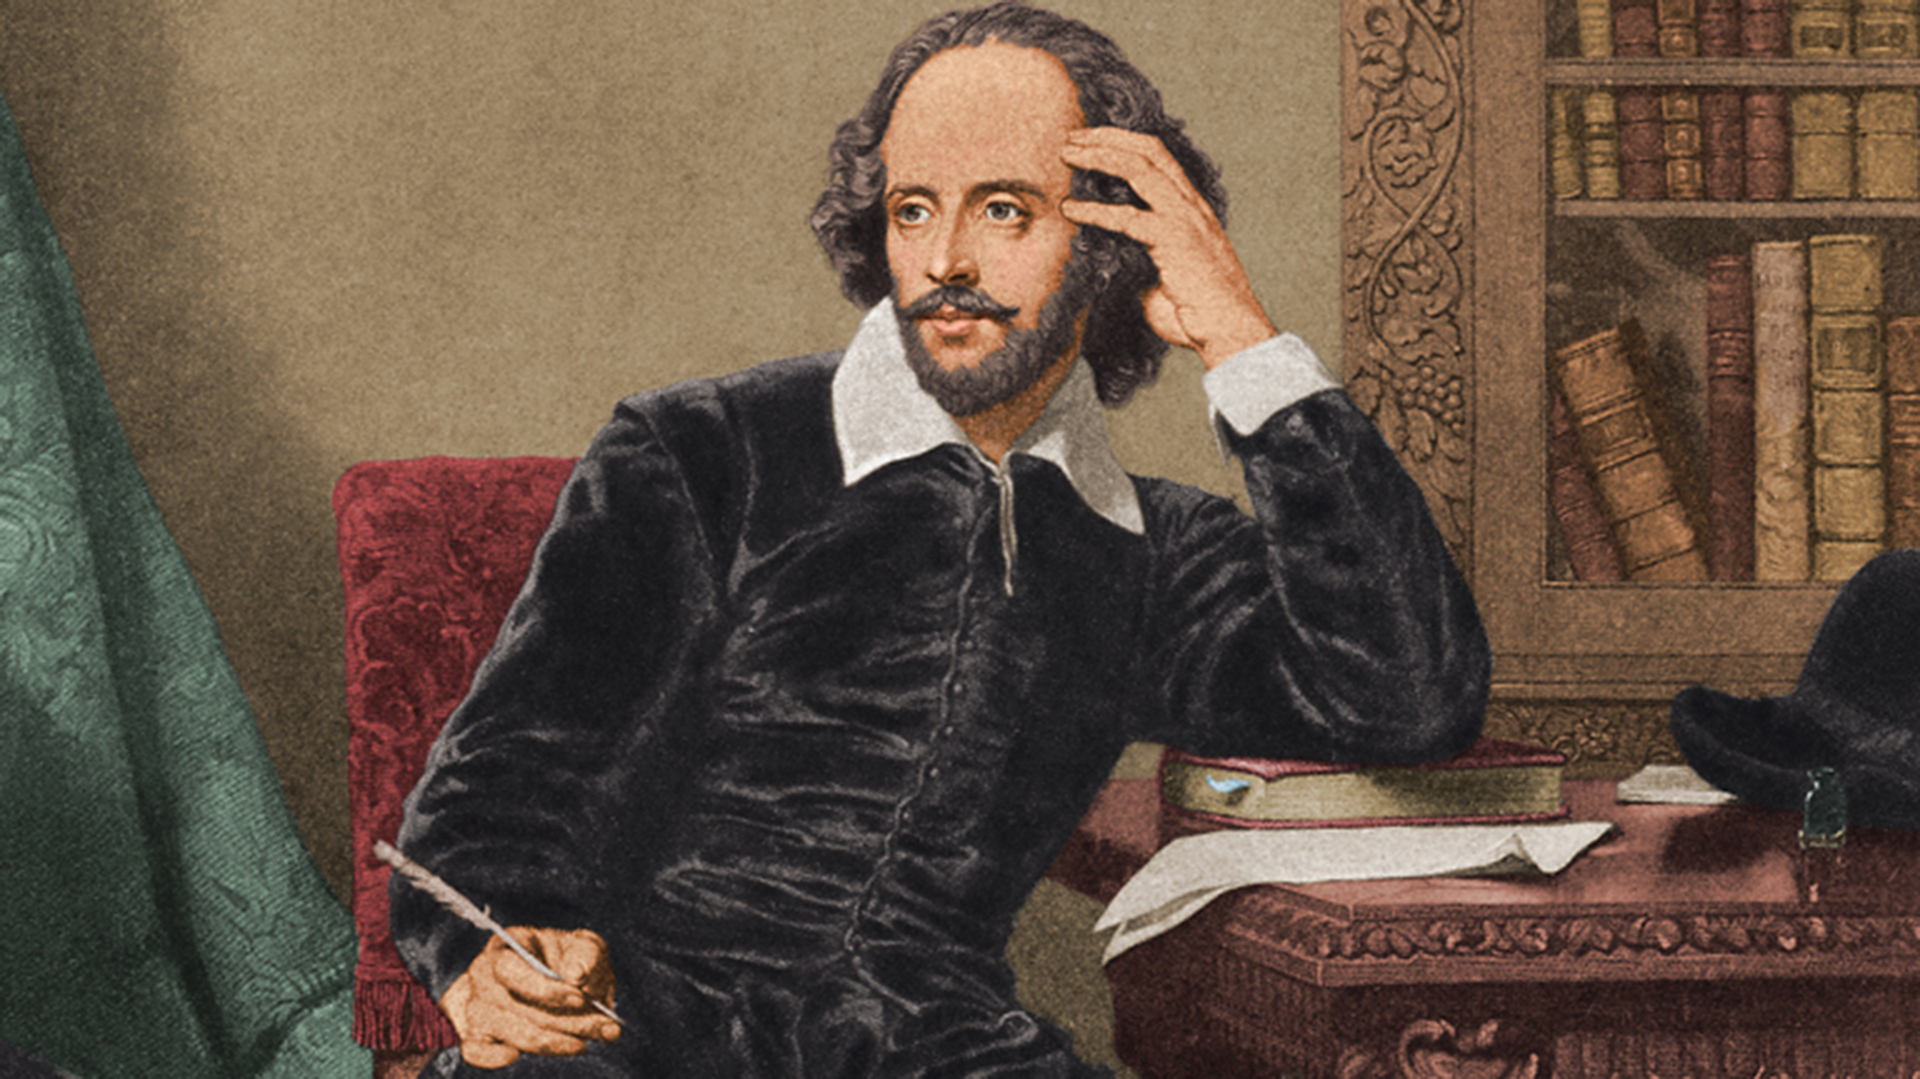 Misterio, tragedias y una tumba maldita: así fue la vida del dramaturgo  William Shakespeare - Infobae